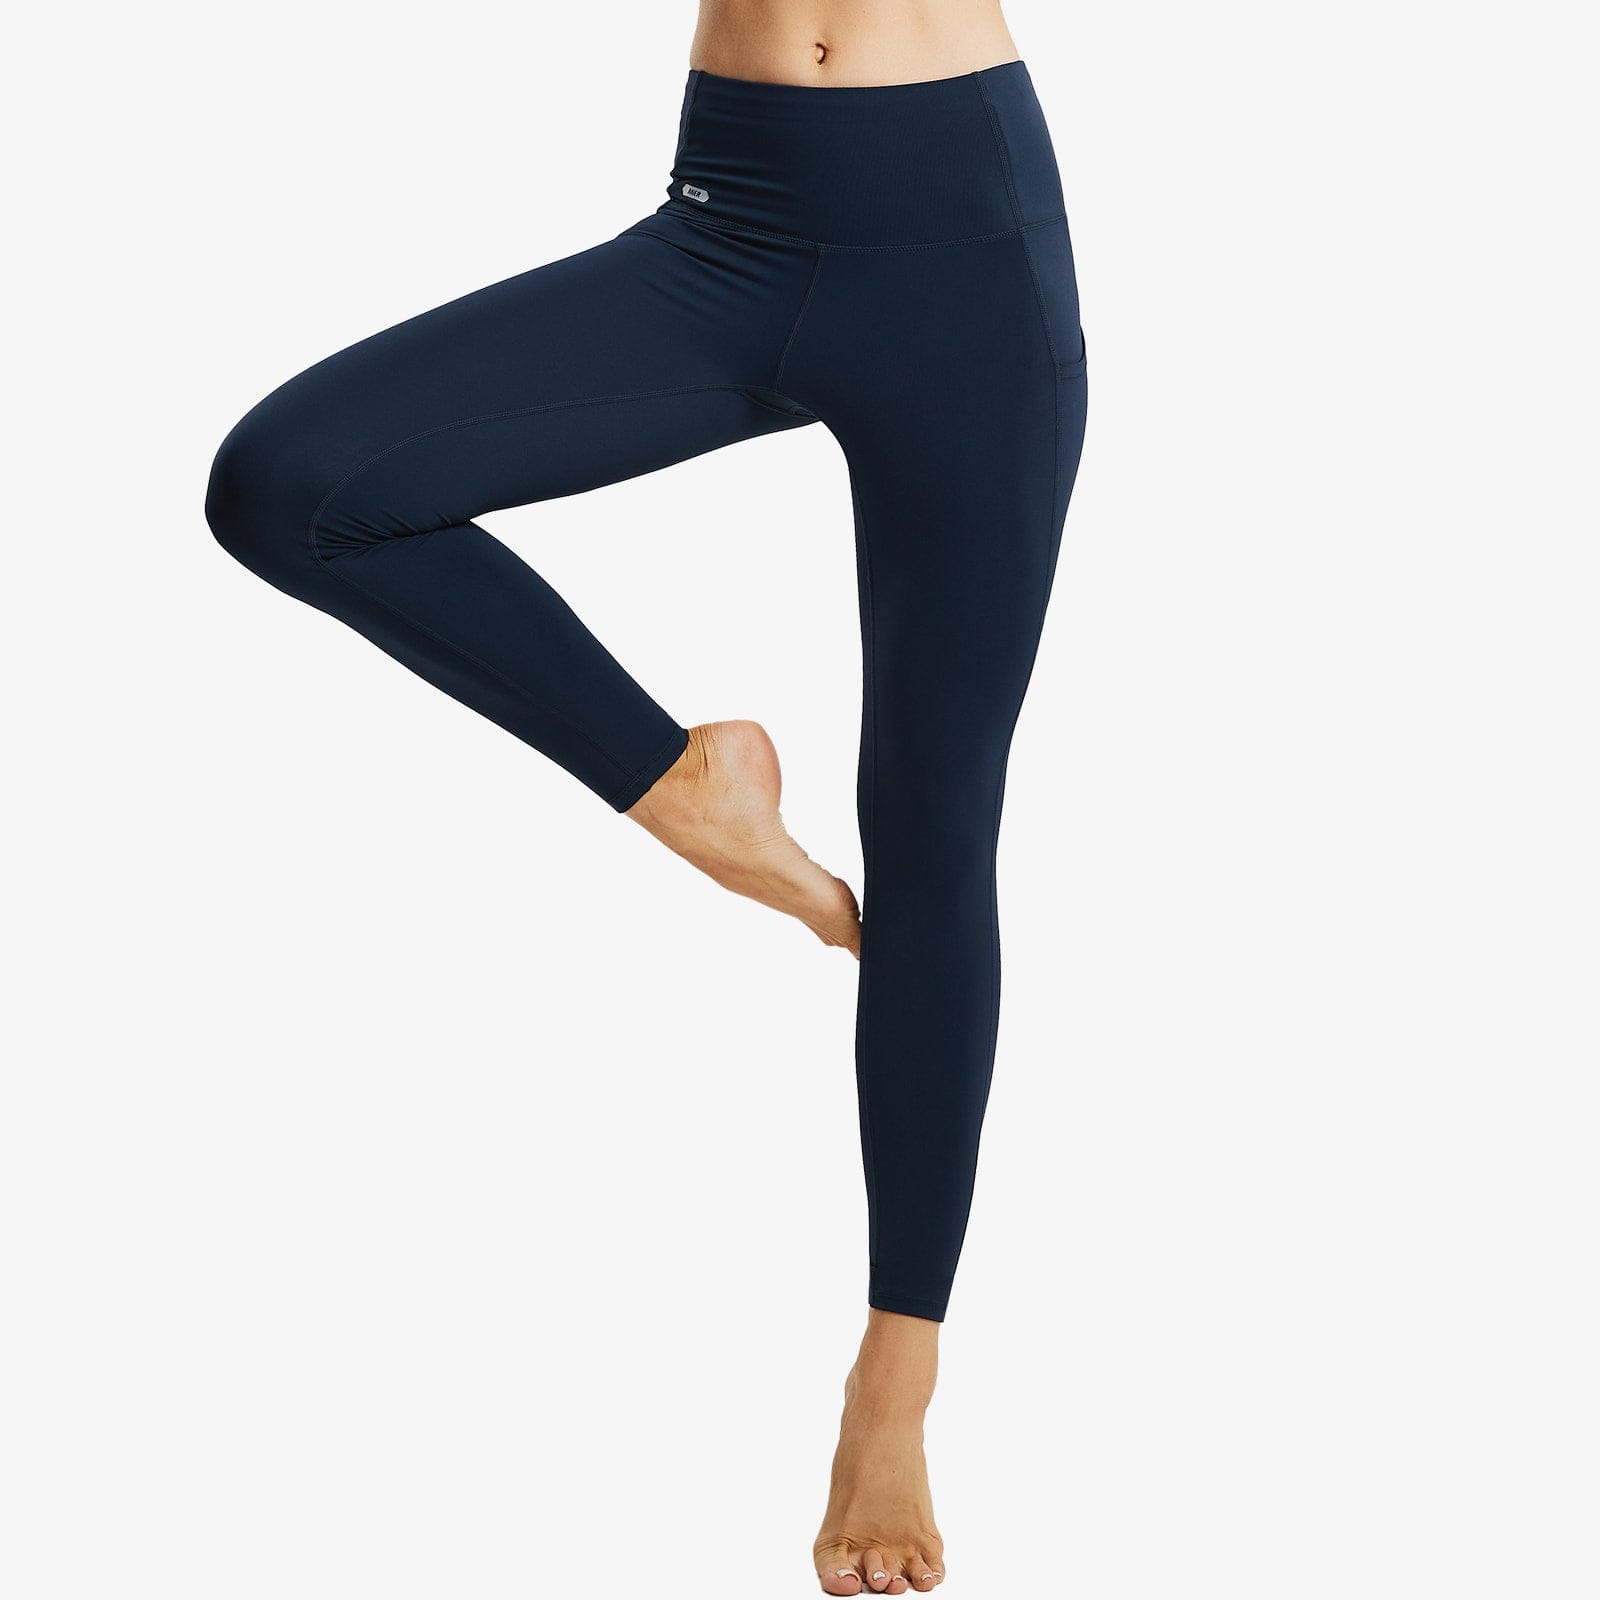 Affordable  squat proof yoga pants/ yoga pants with pockets 